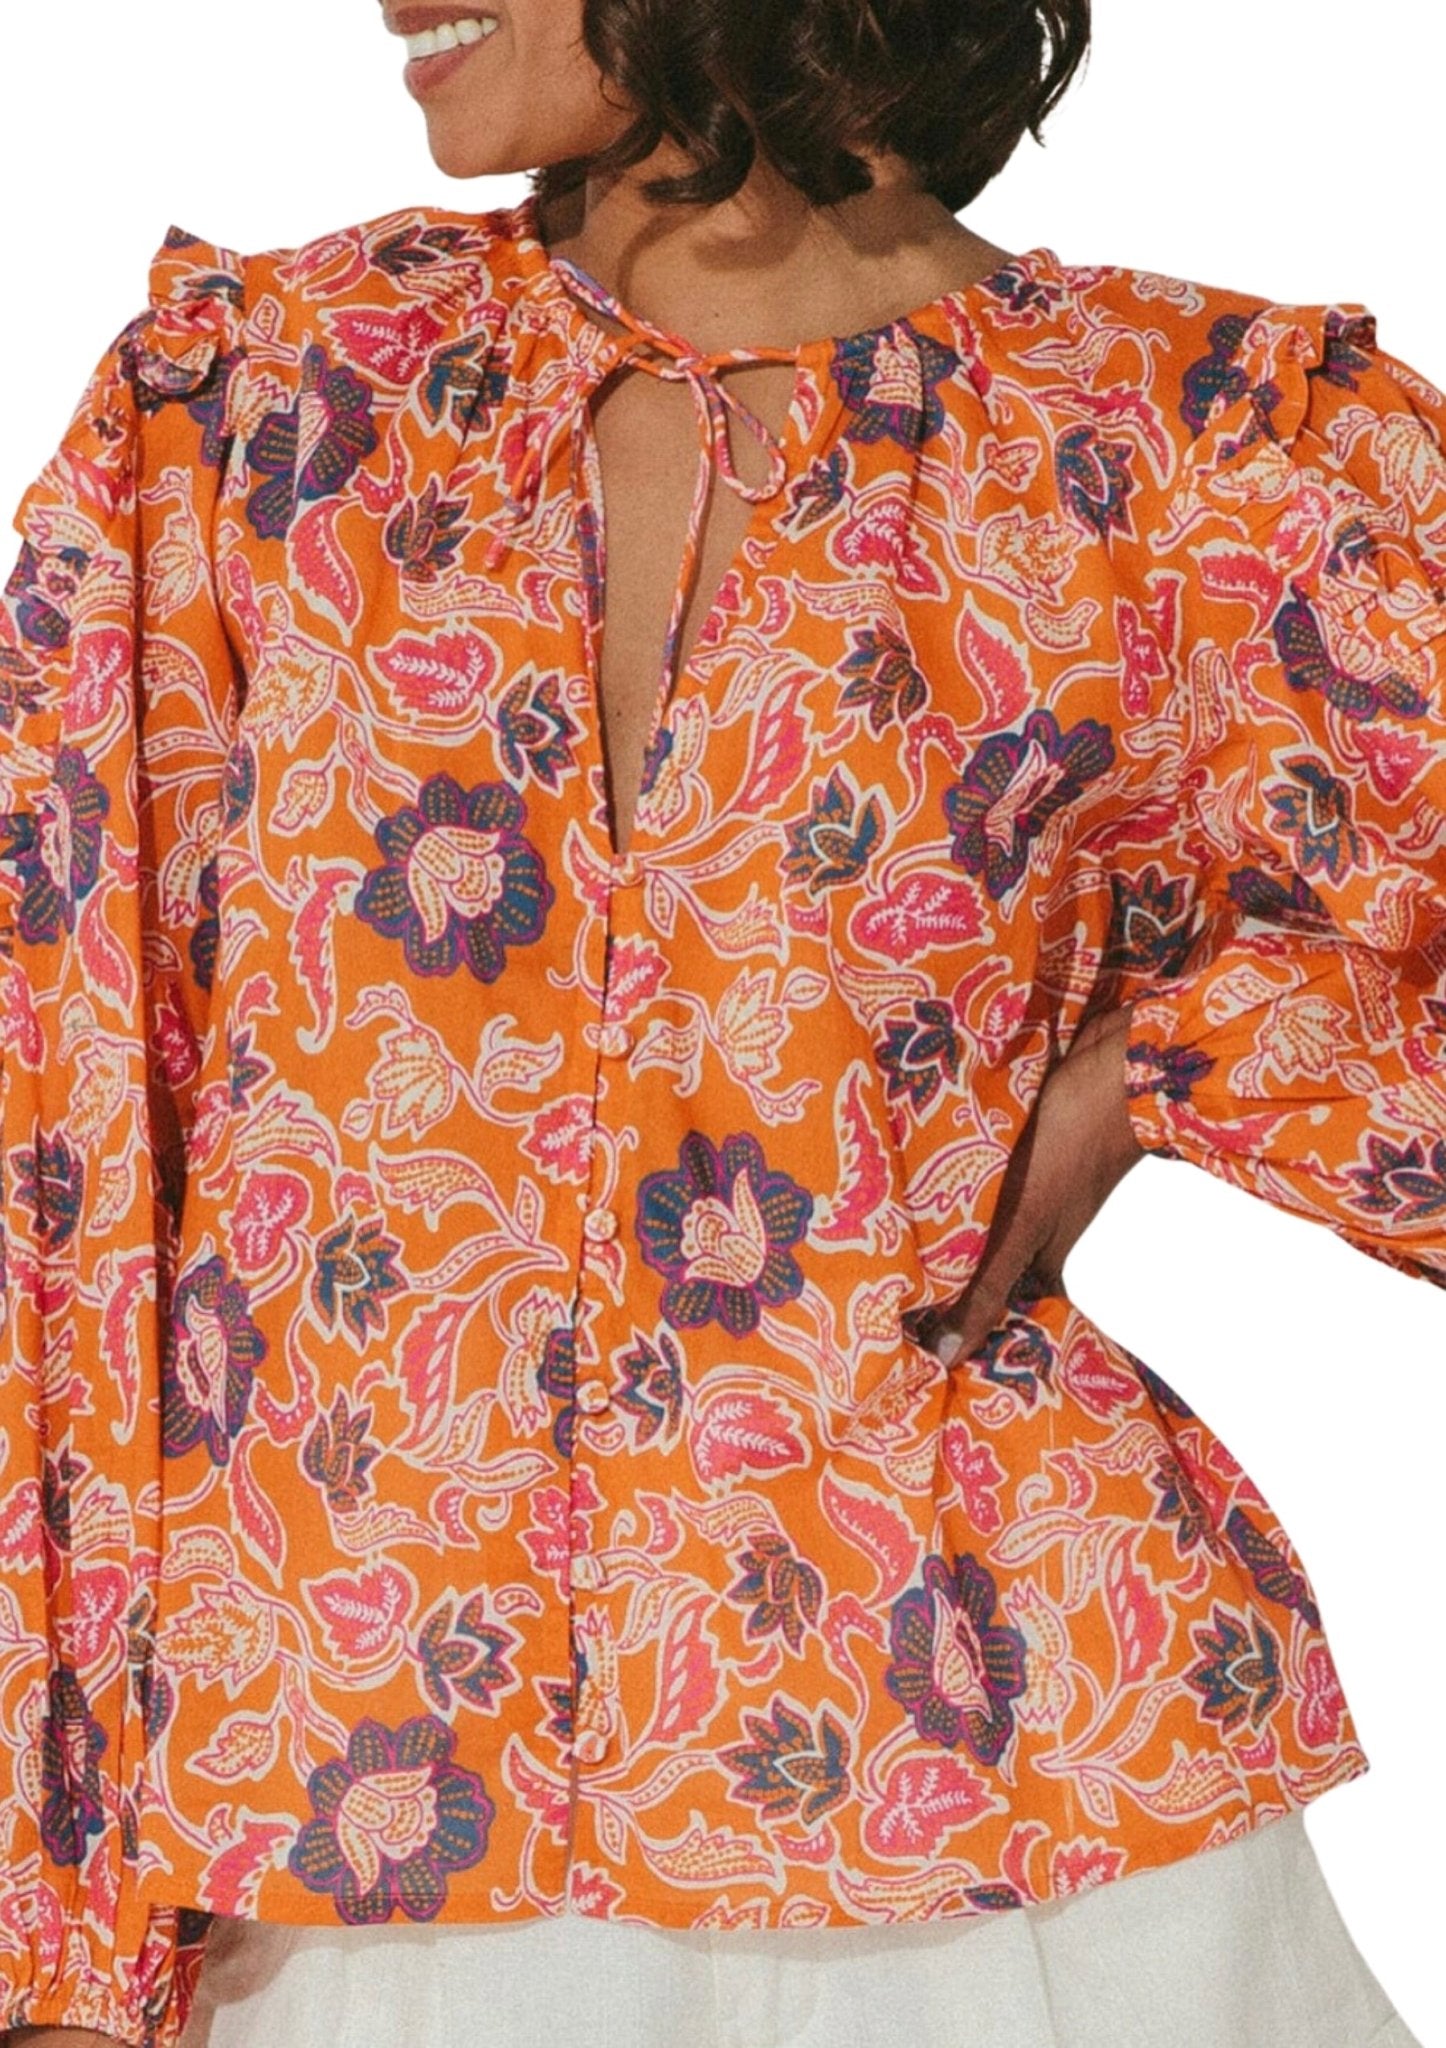 Cleobella-talia-button-front-blouse-tropique-tops-blouse-georgia-kate